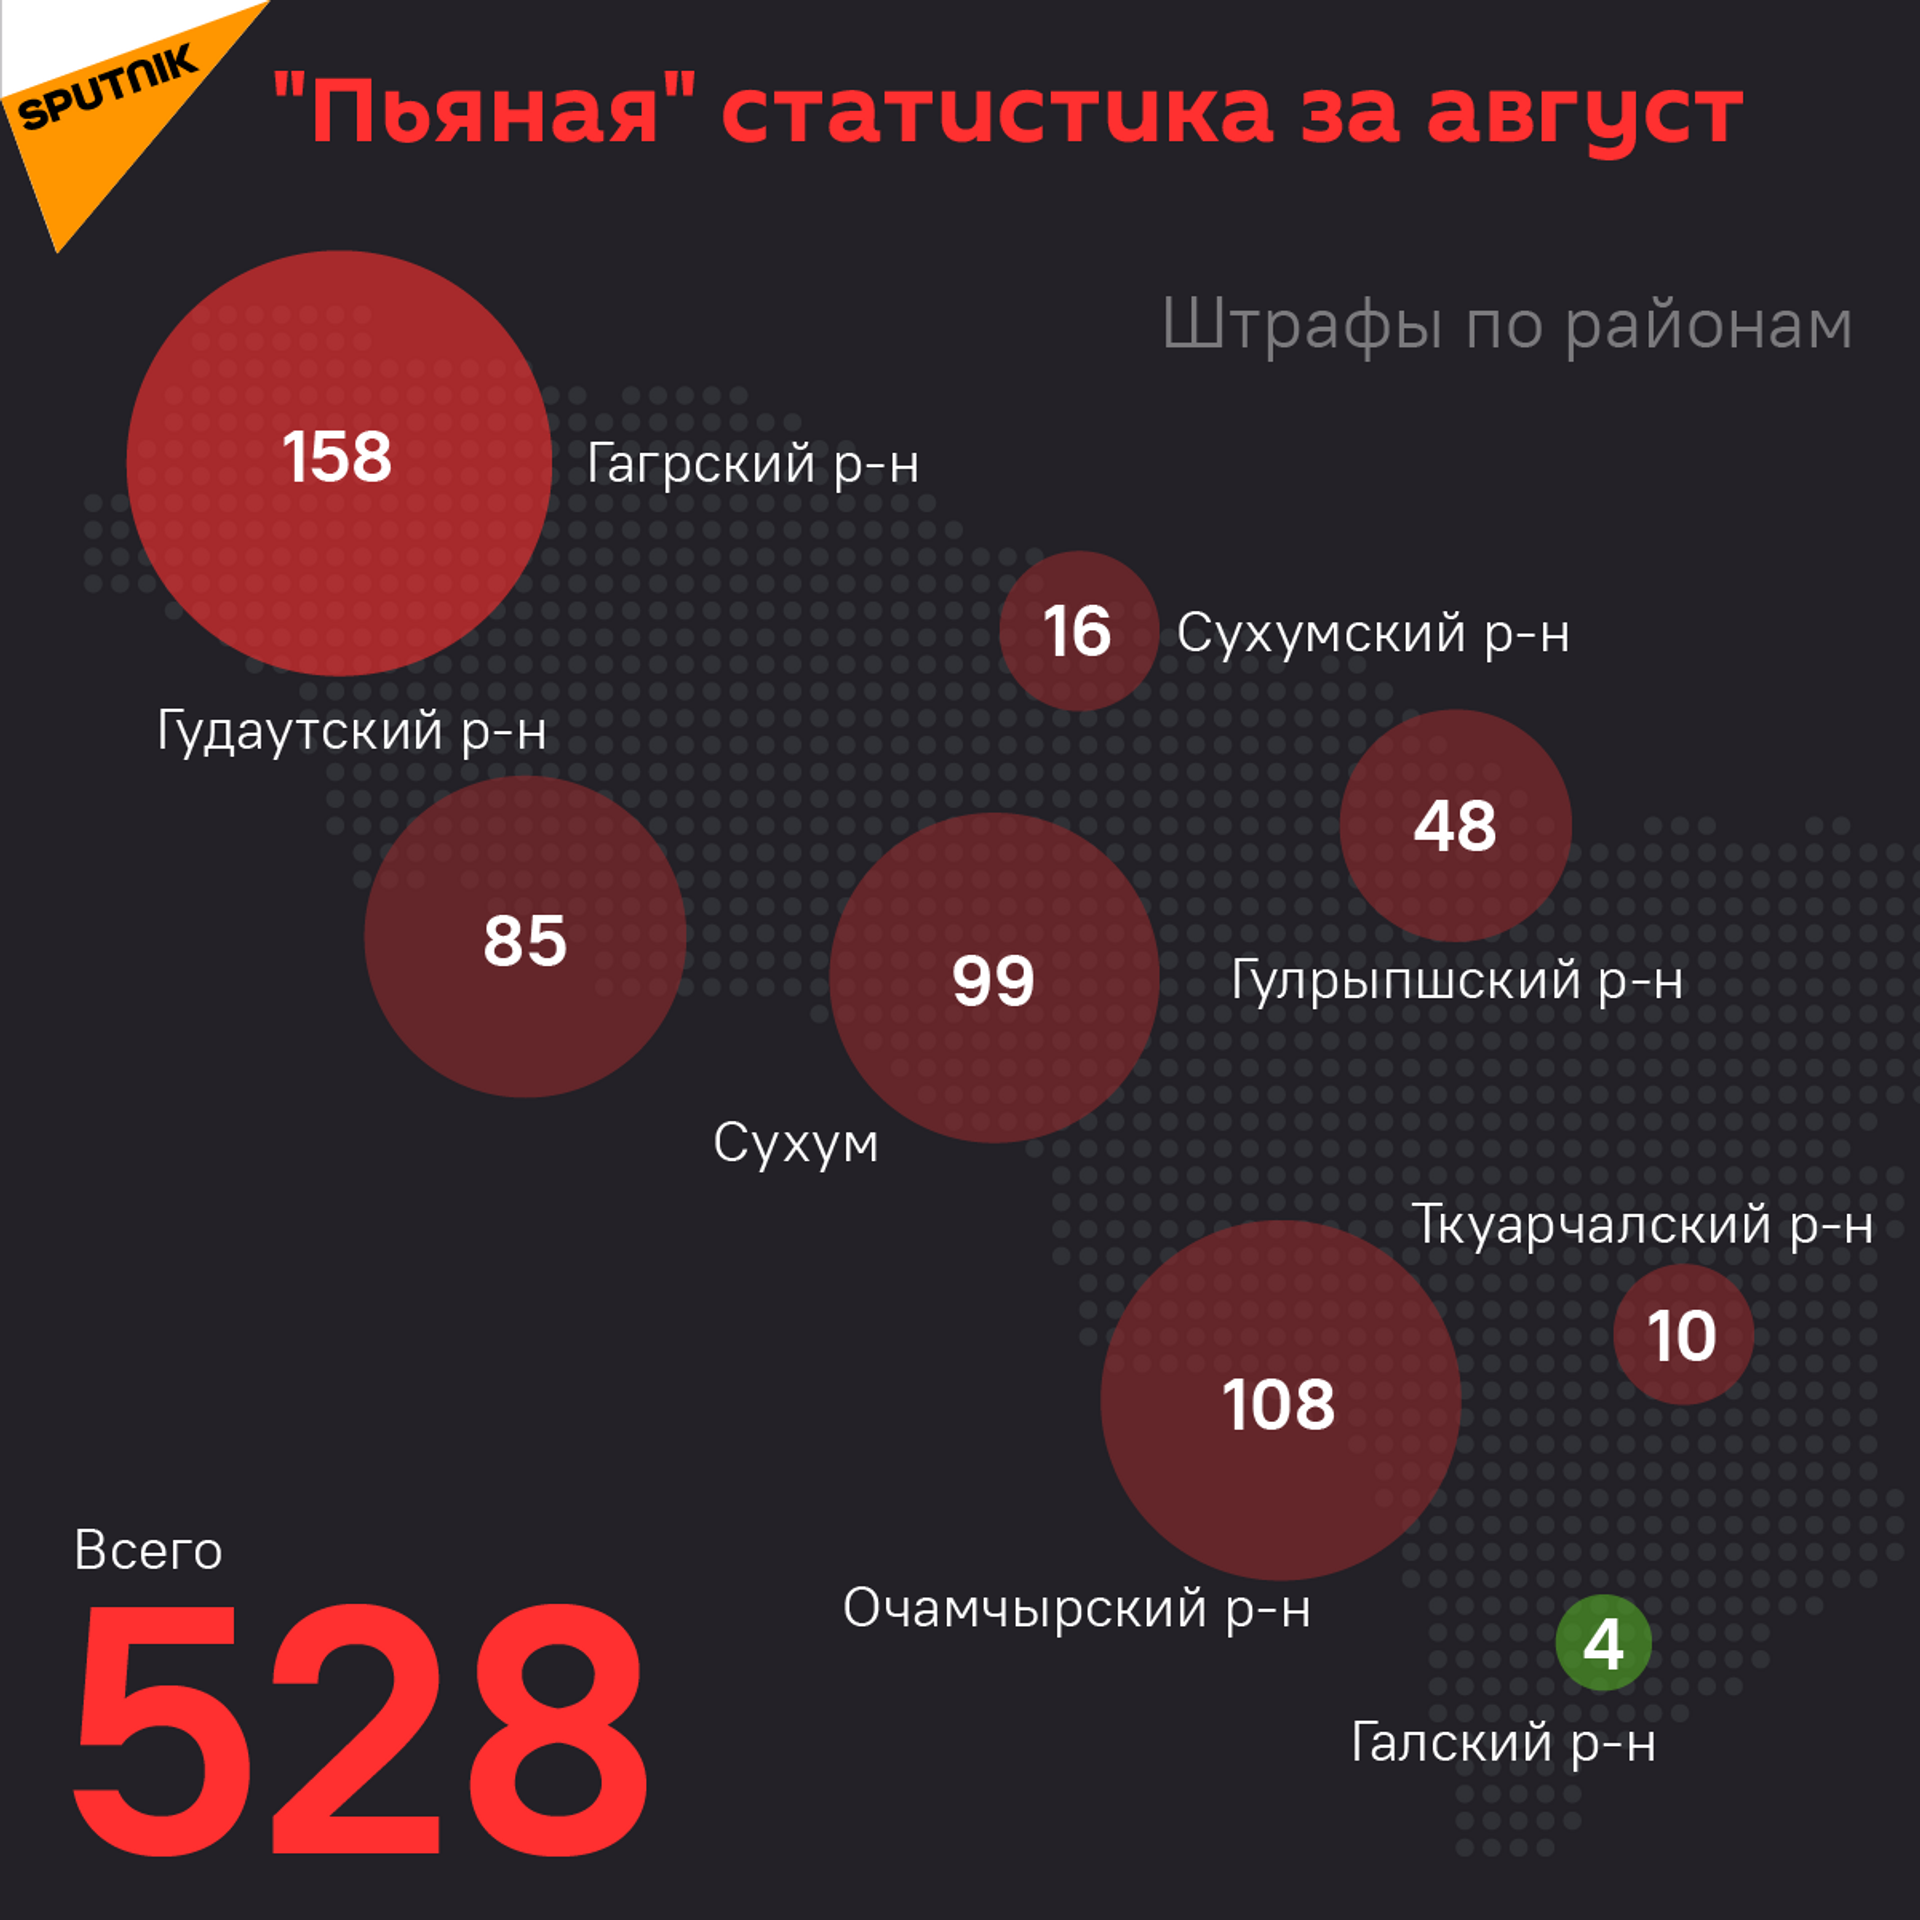 Пьяная статистика за август  - Sputnik Абхазия, 1920, 12.10.2021